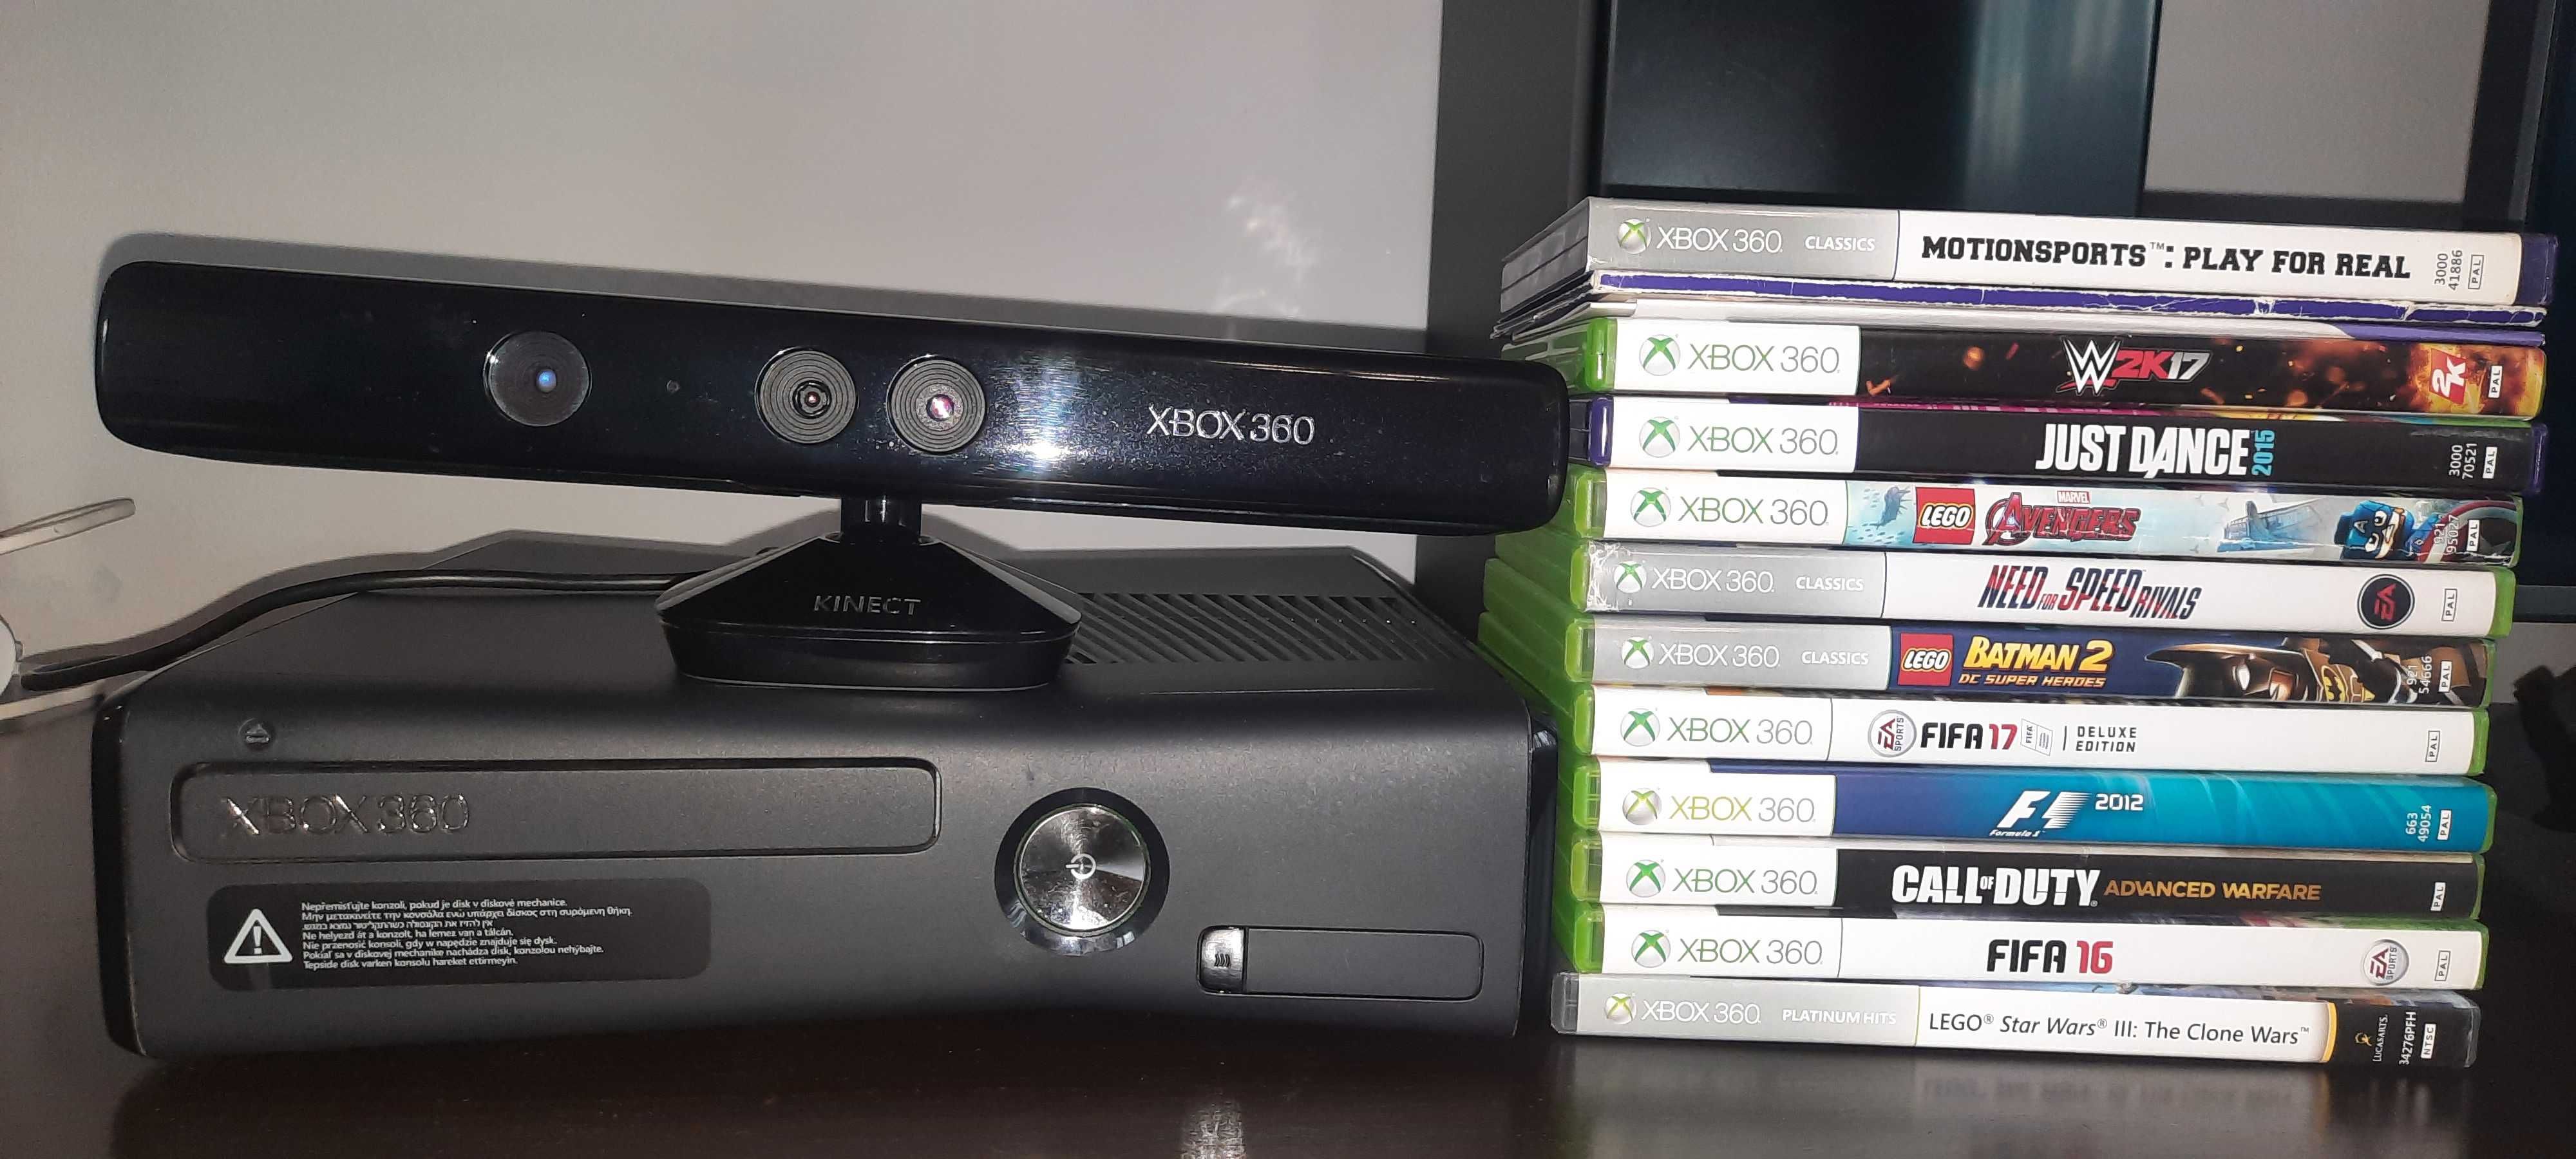 Xbox 360 cu Kinect